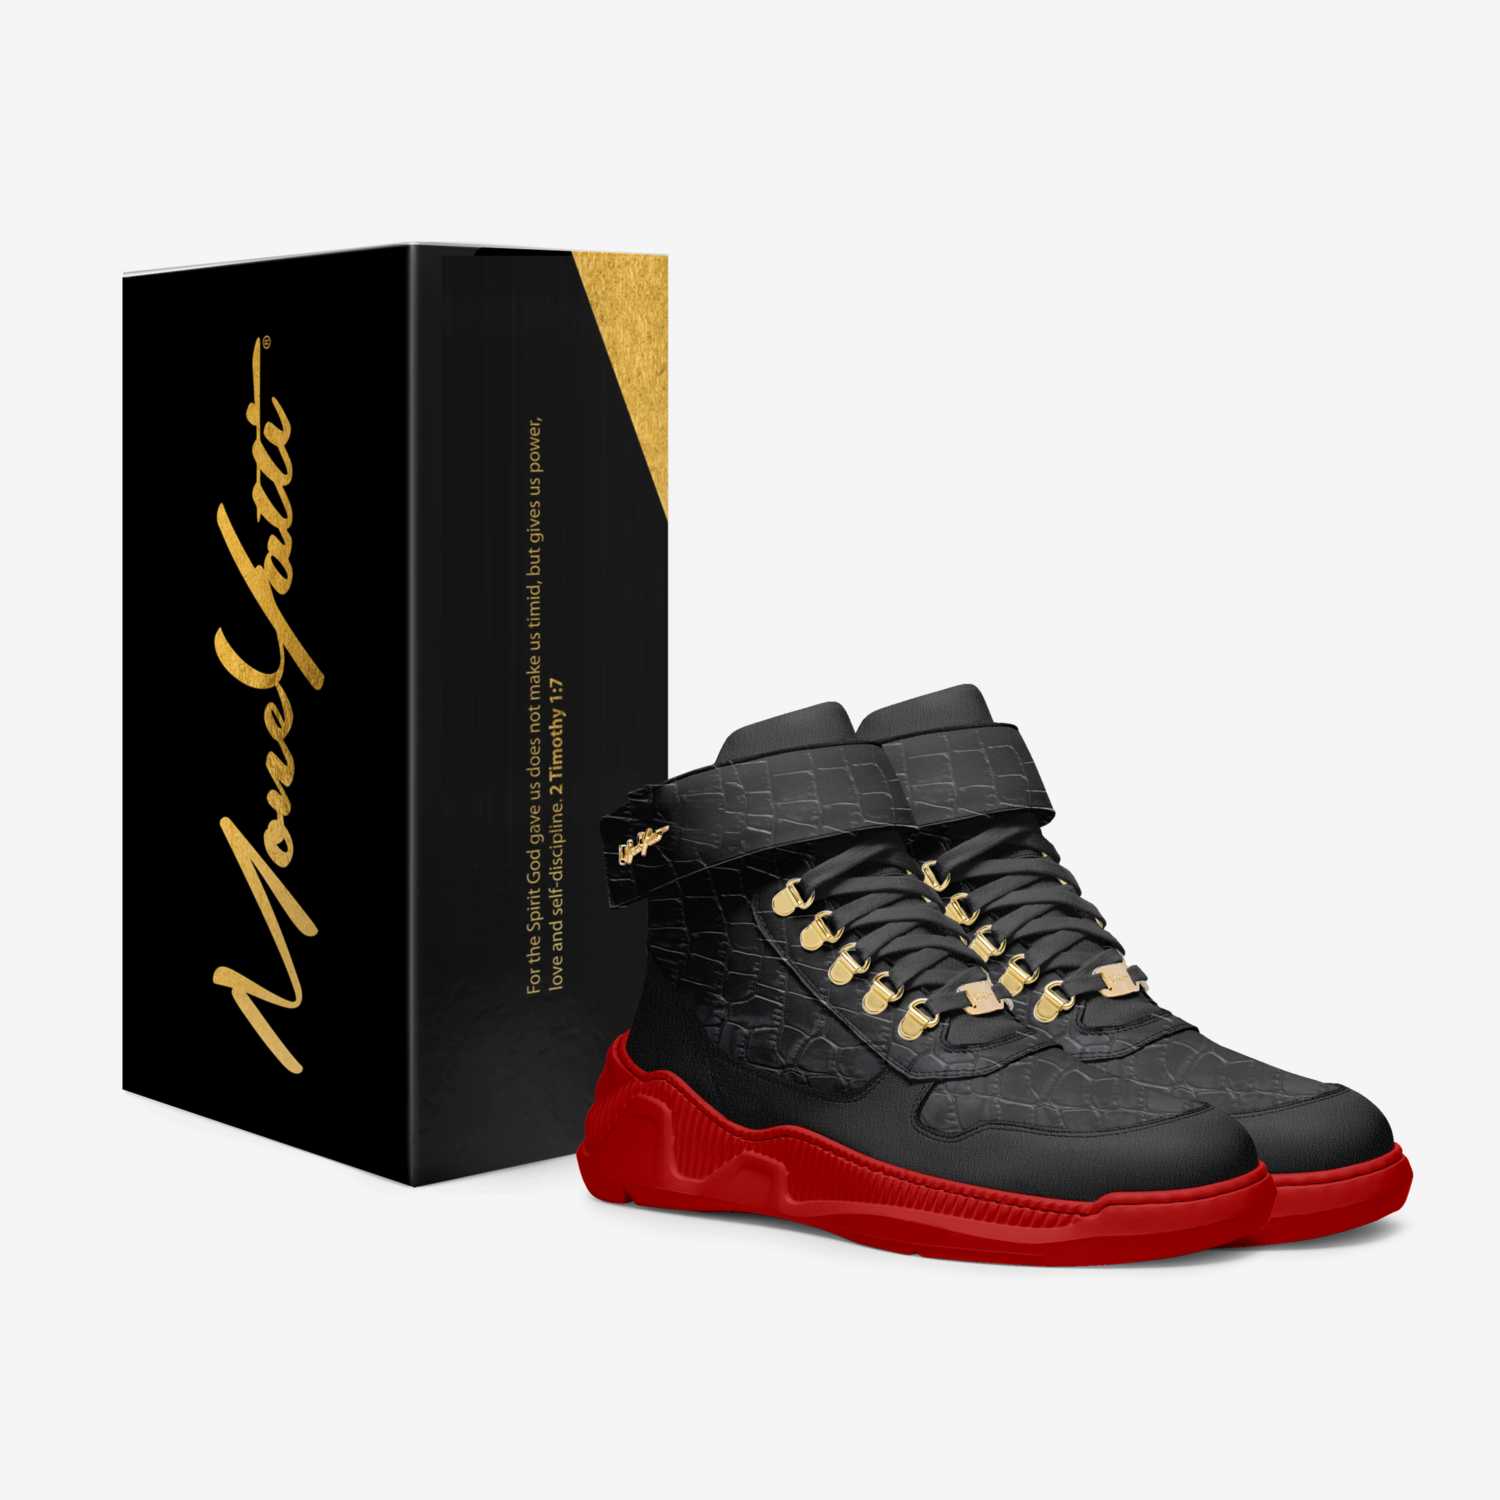 Moneyatti Traps09 custom made in Italy shoes by Moneyatti Brand | Box view